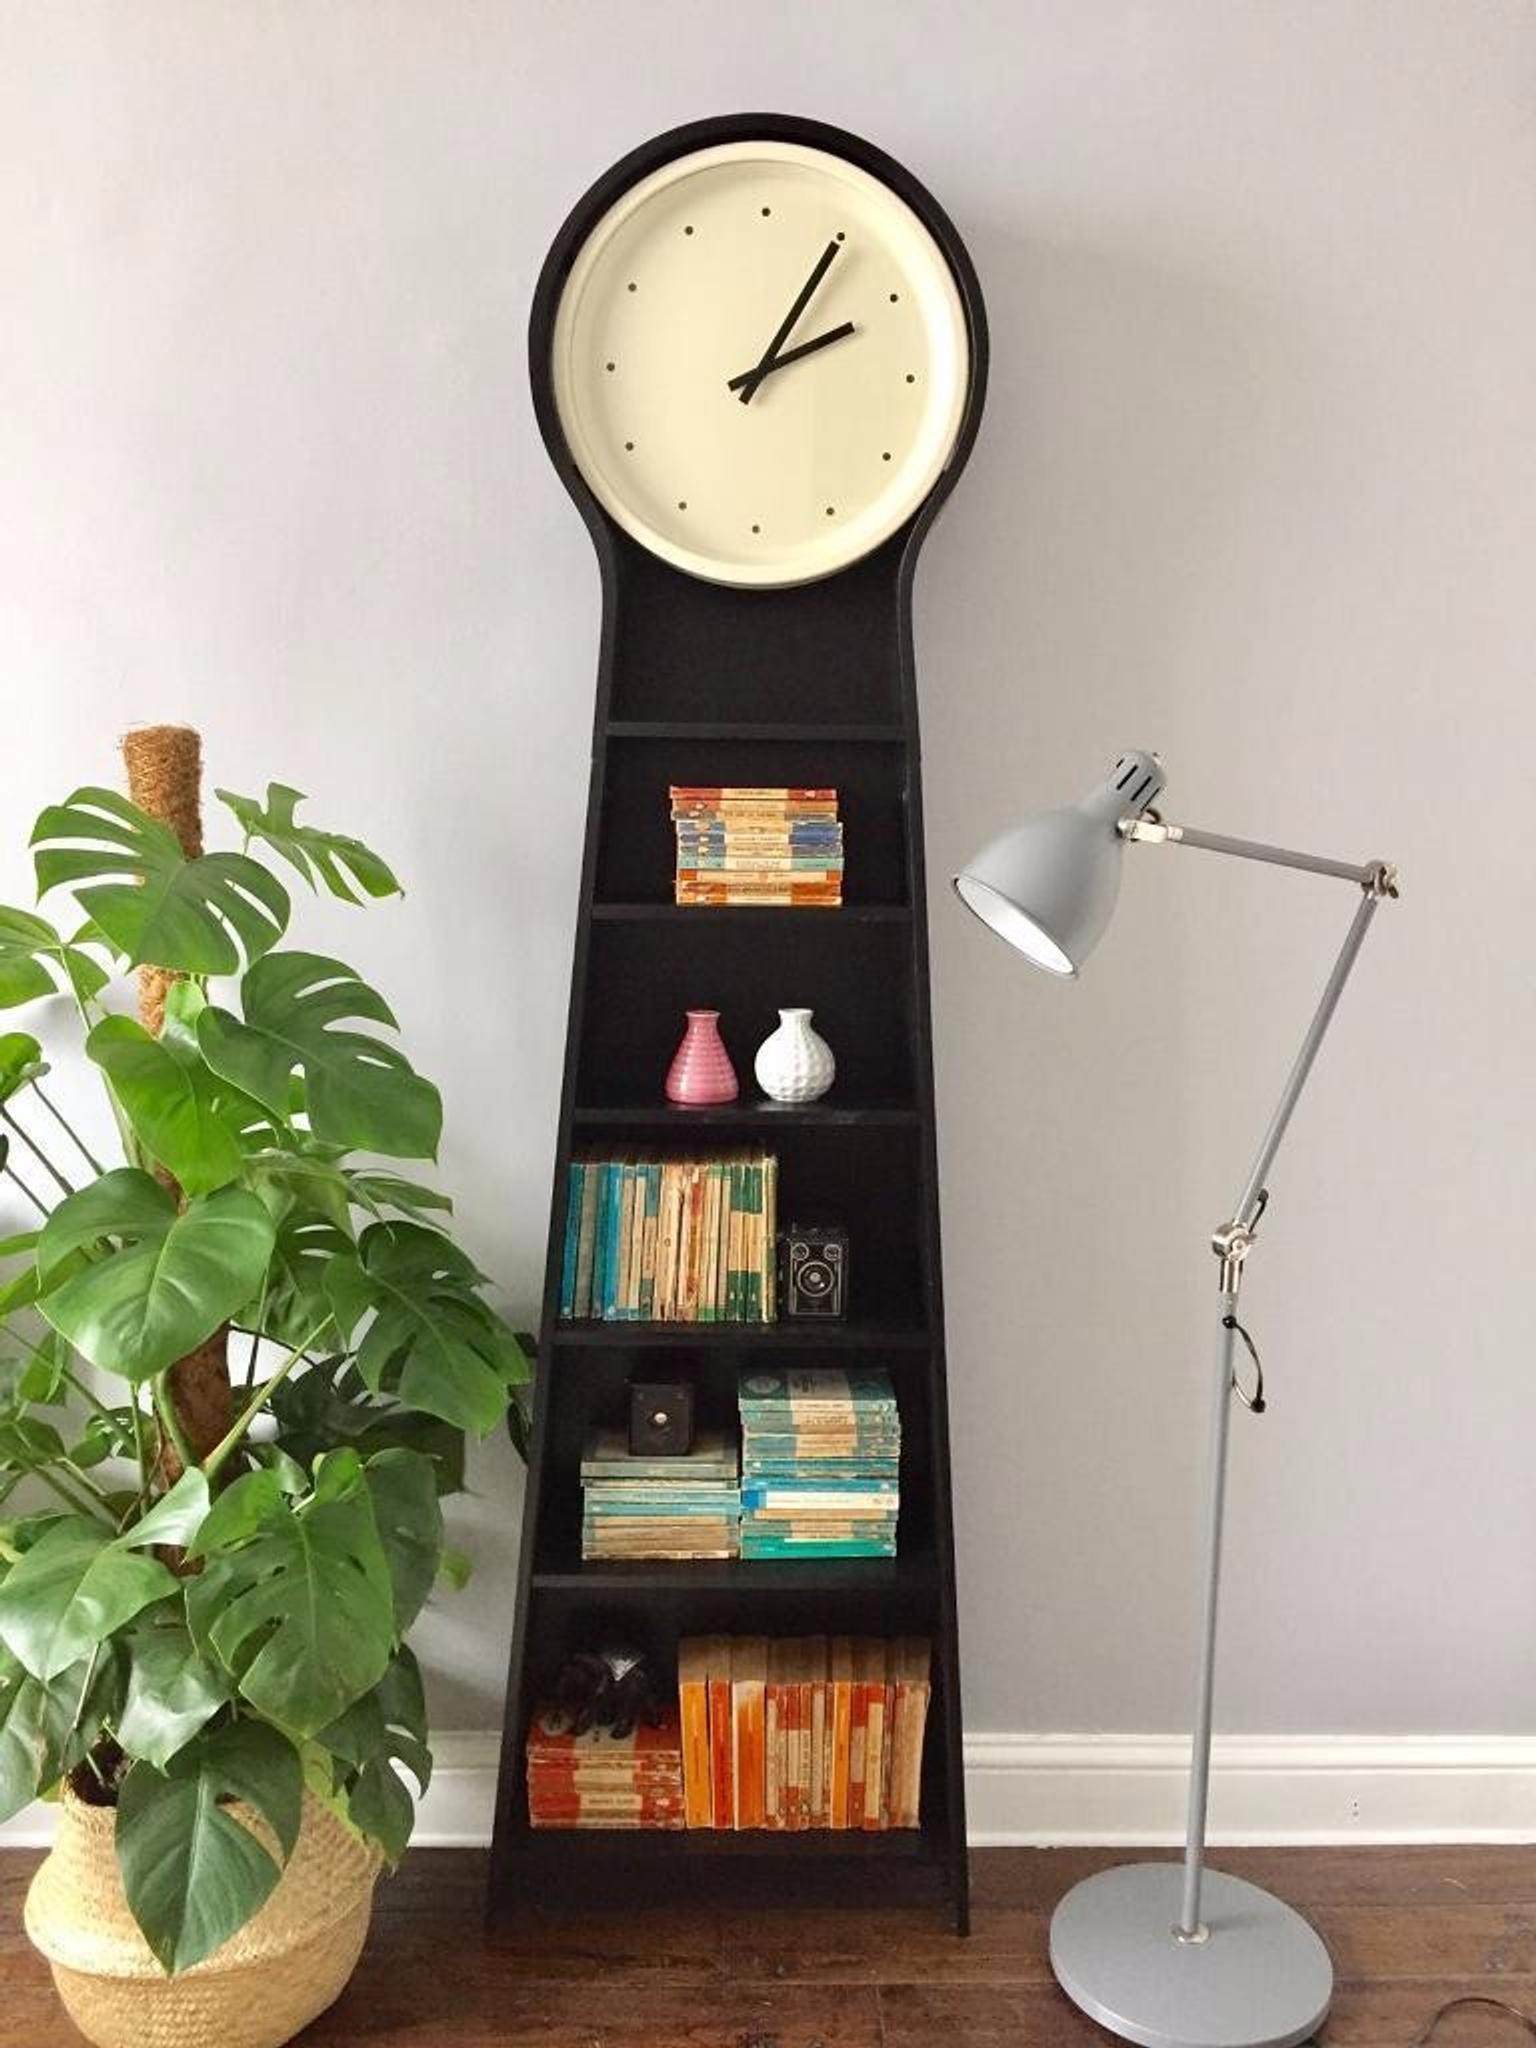 Ikea Ps Pendel Grandfather Clock Bookcase In Rg7 Common For 70 00